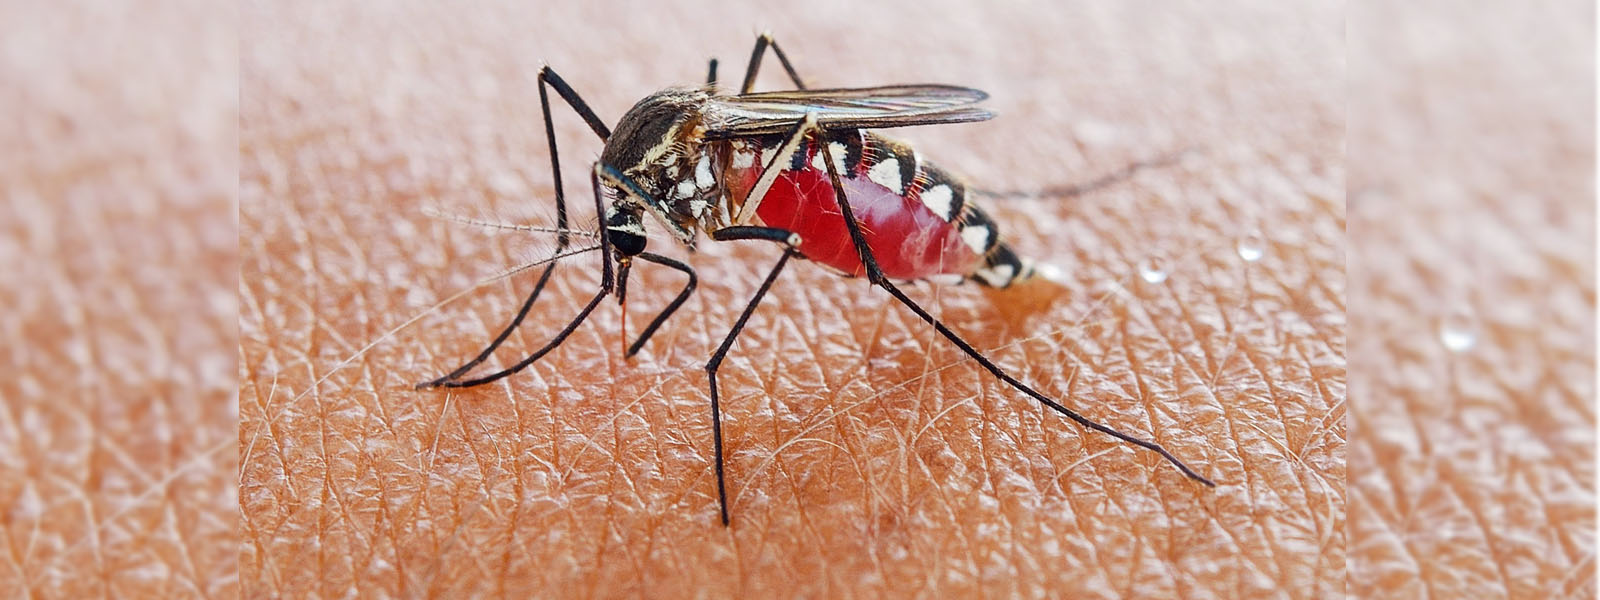 Malaria raising its head in Sri Lanka once again?